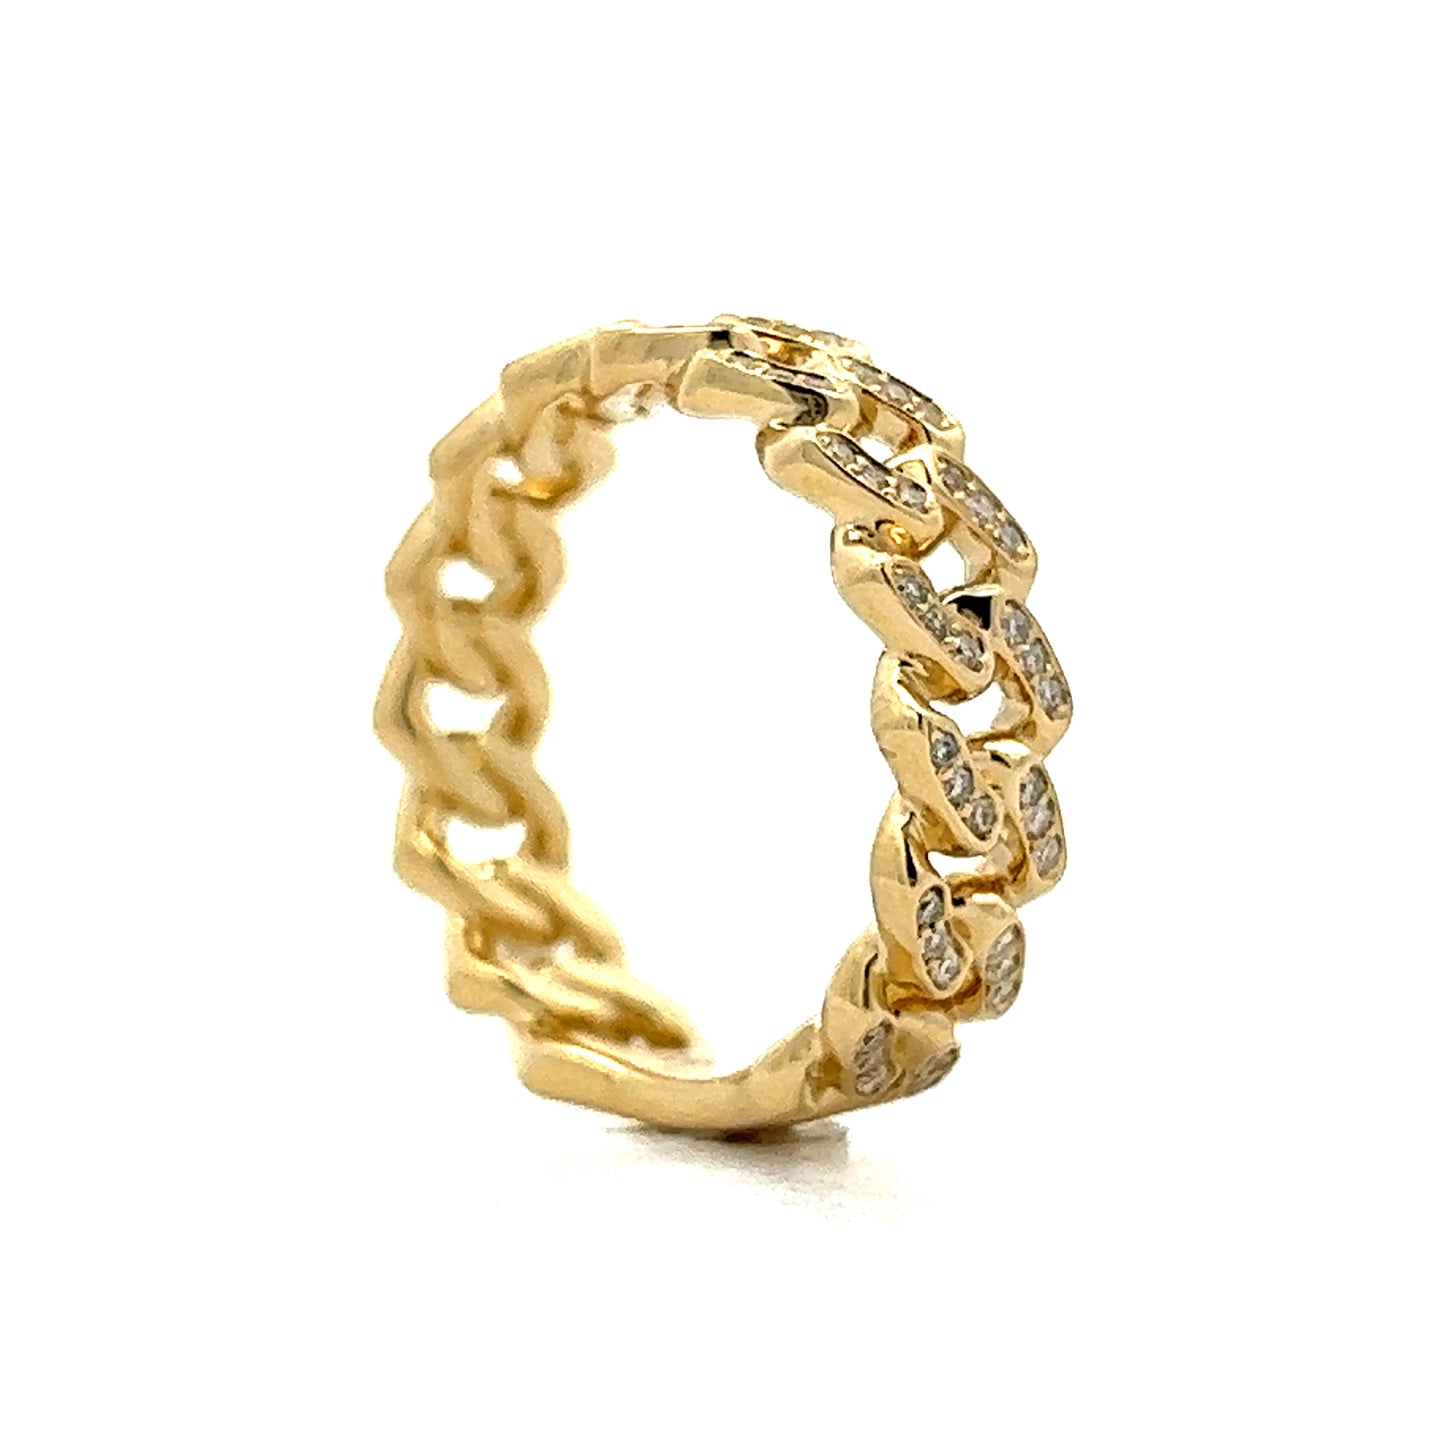 Diamond Eternity Cuban Link Ring in 14k Yellow Gold